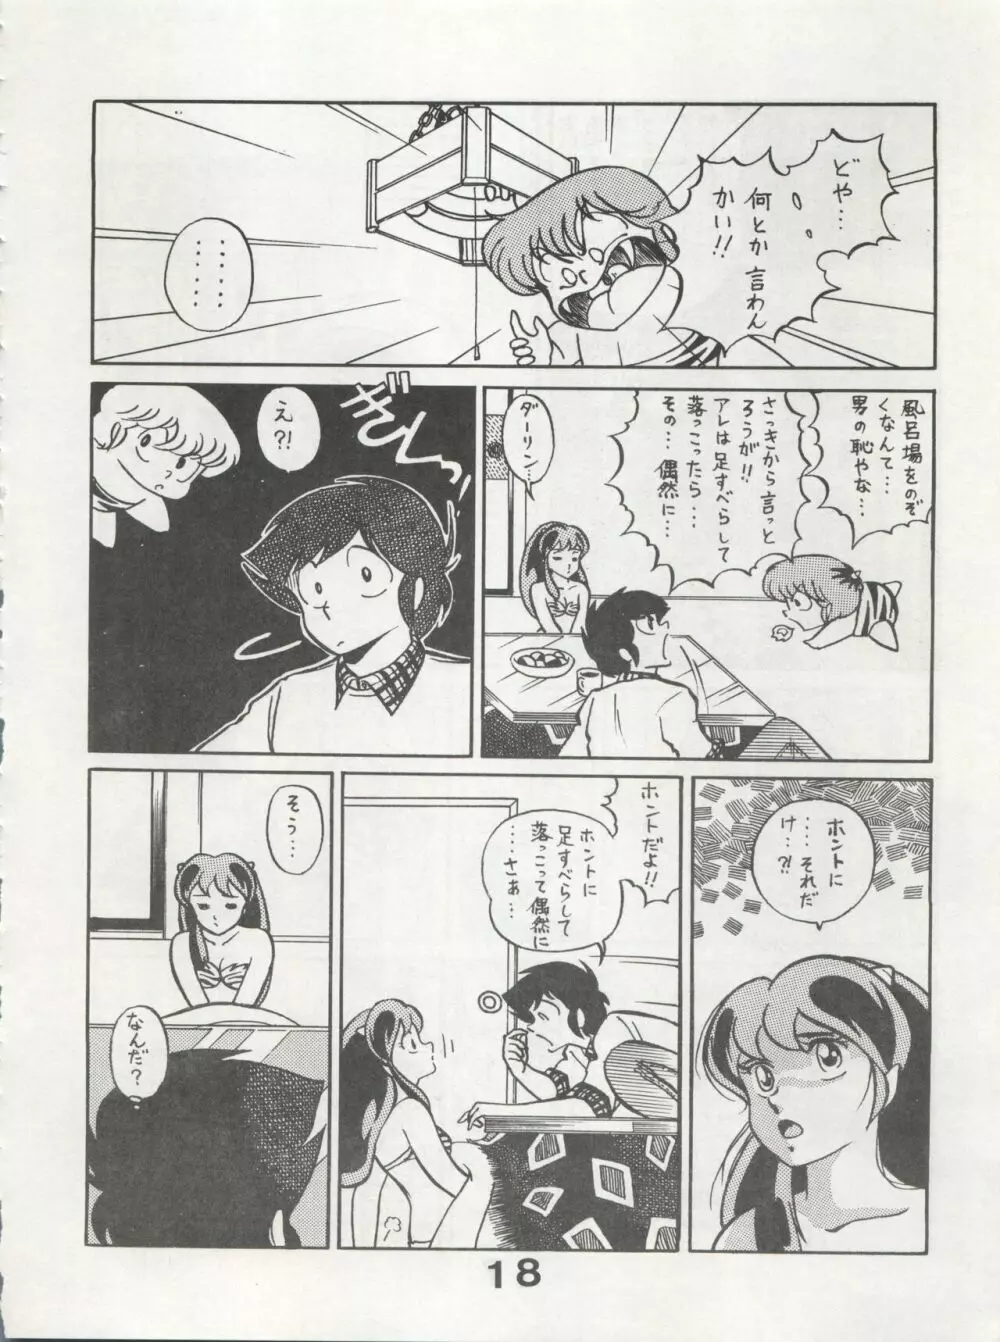 MoN MoN もんモン Vol.5 - page18